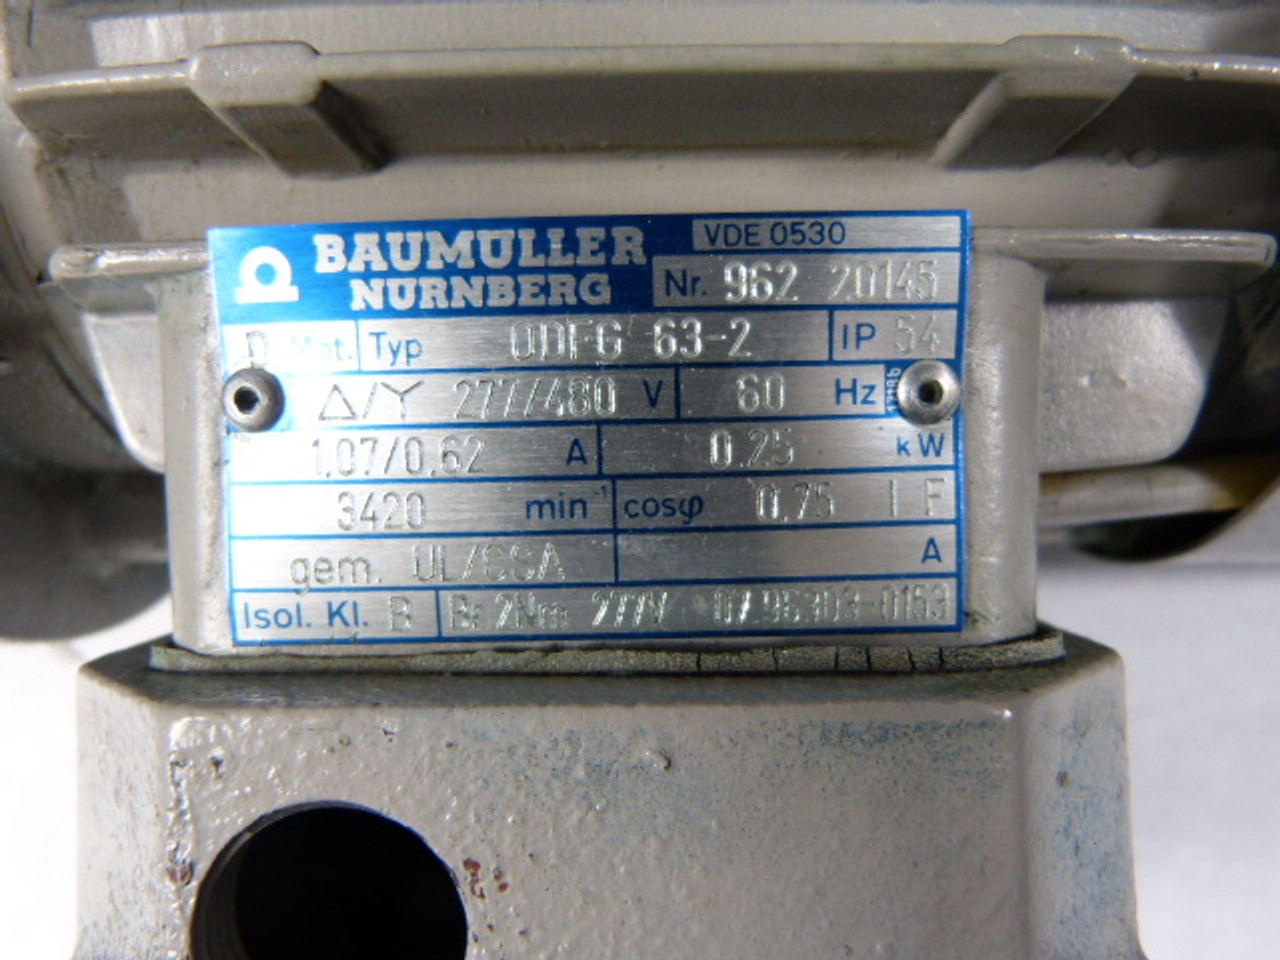 Baumuller 0.25kW 3420RPM 277/460V TEFC 3Ph 1.07/0.62A 60Hz USED